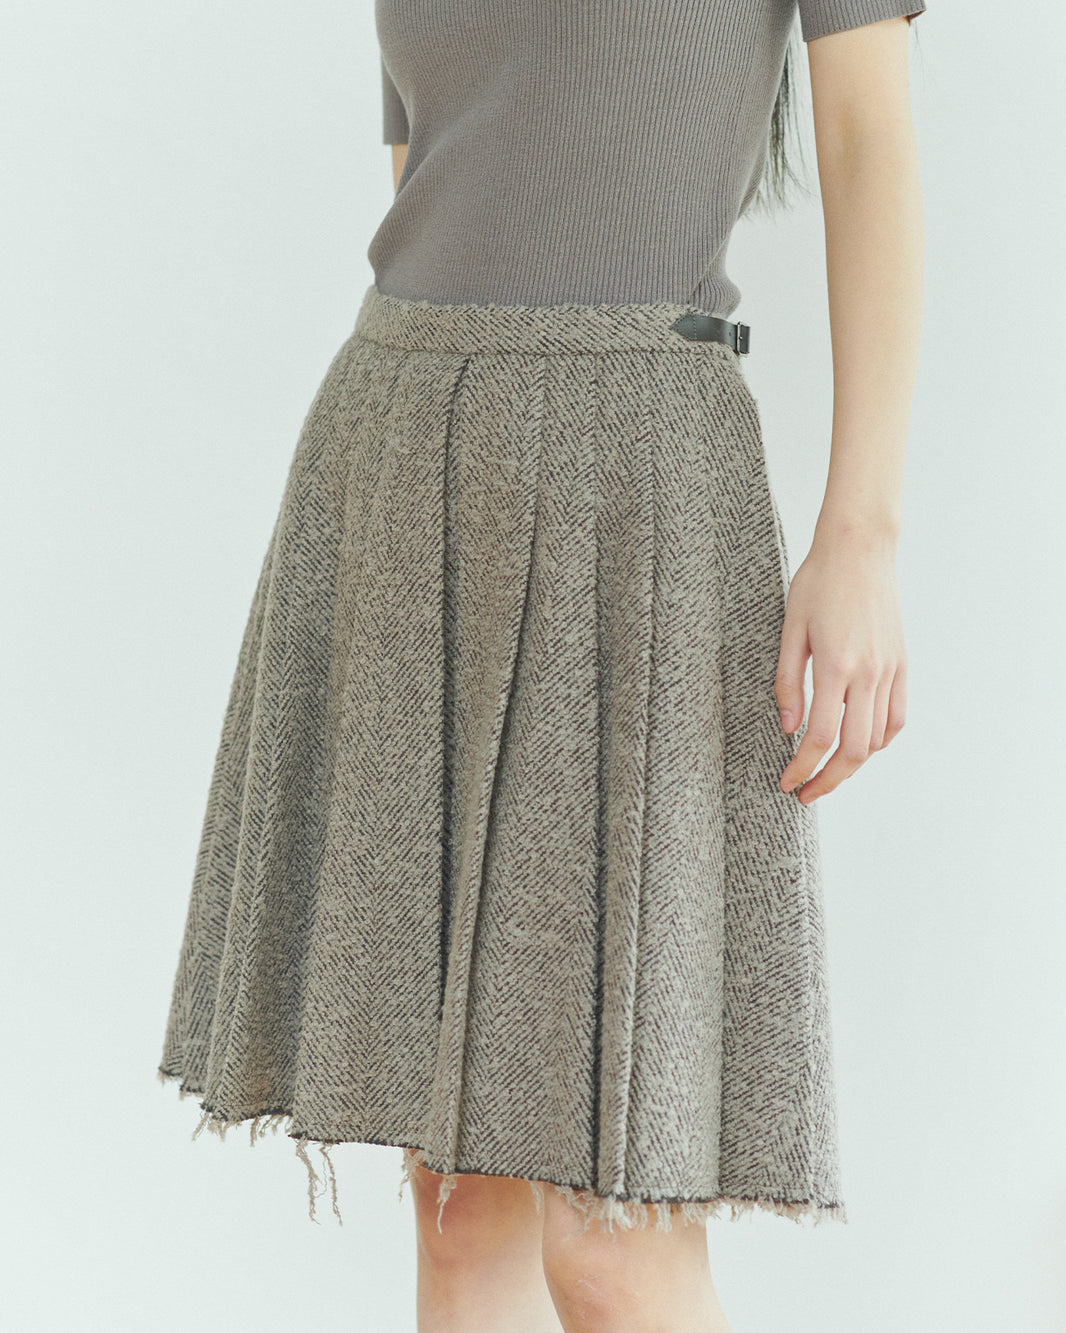 herringbone tackpleats skirt